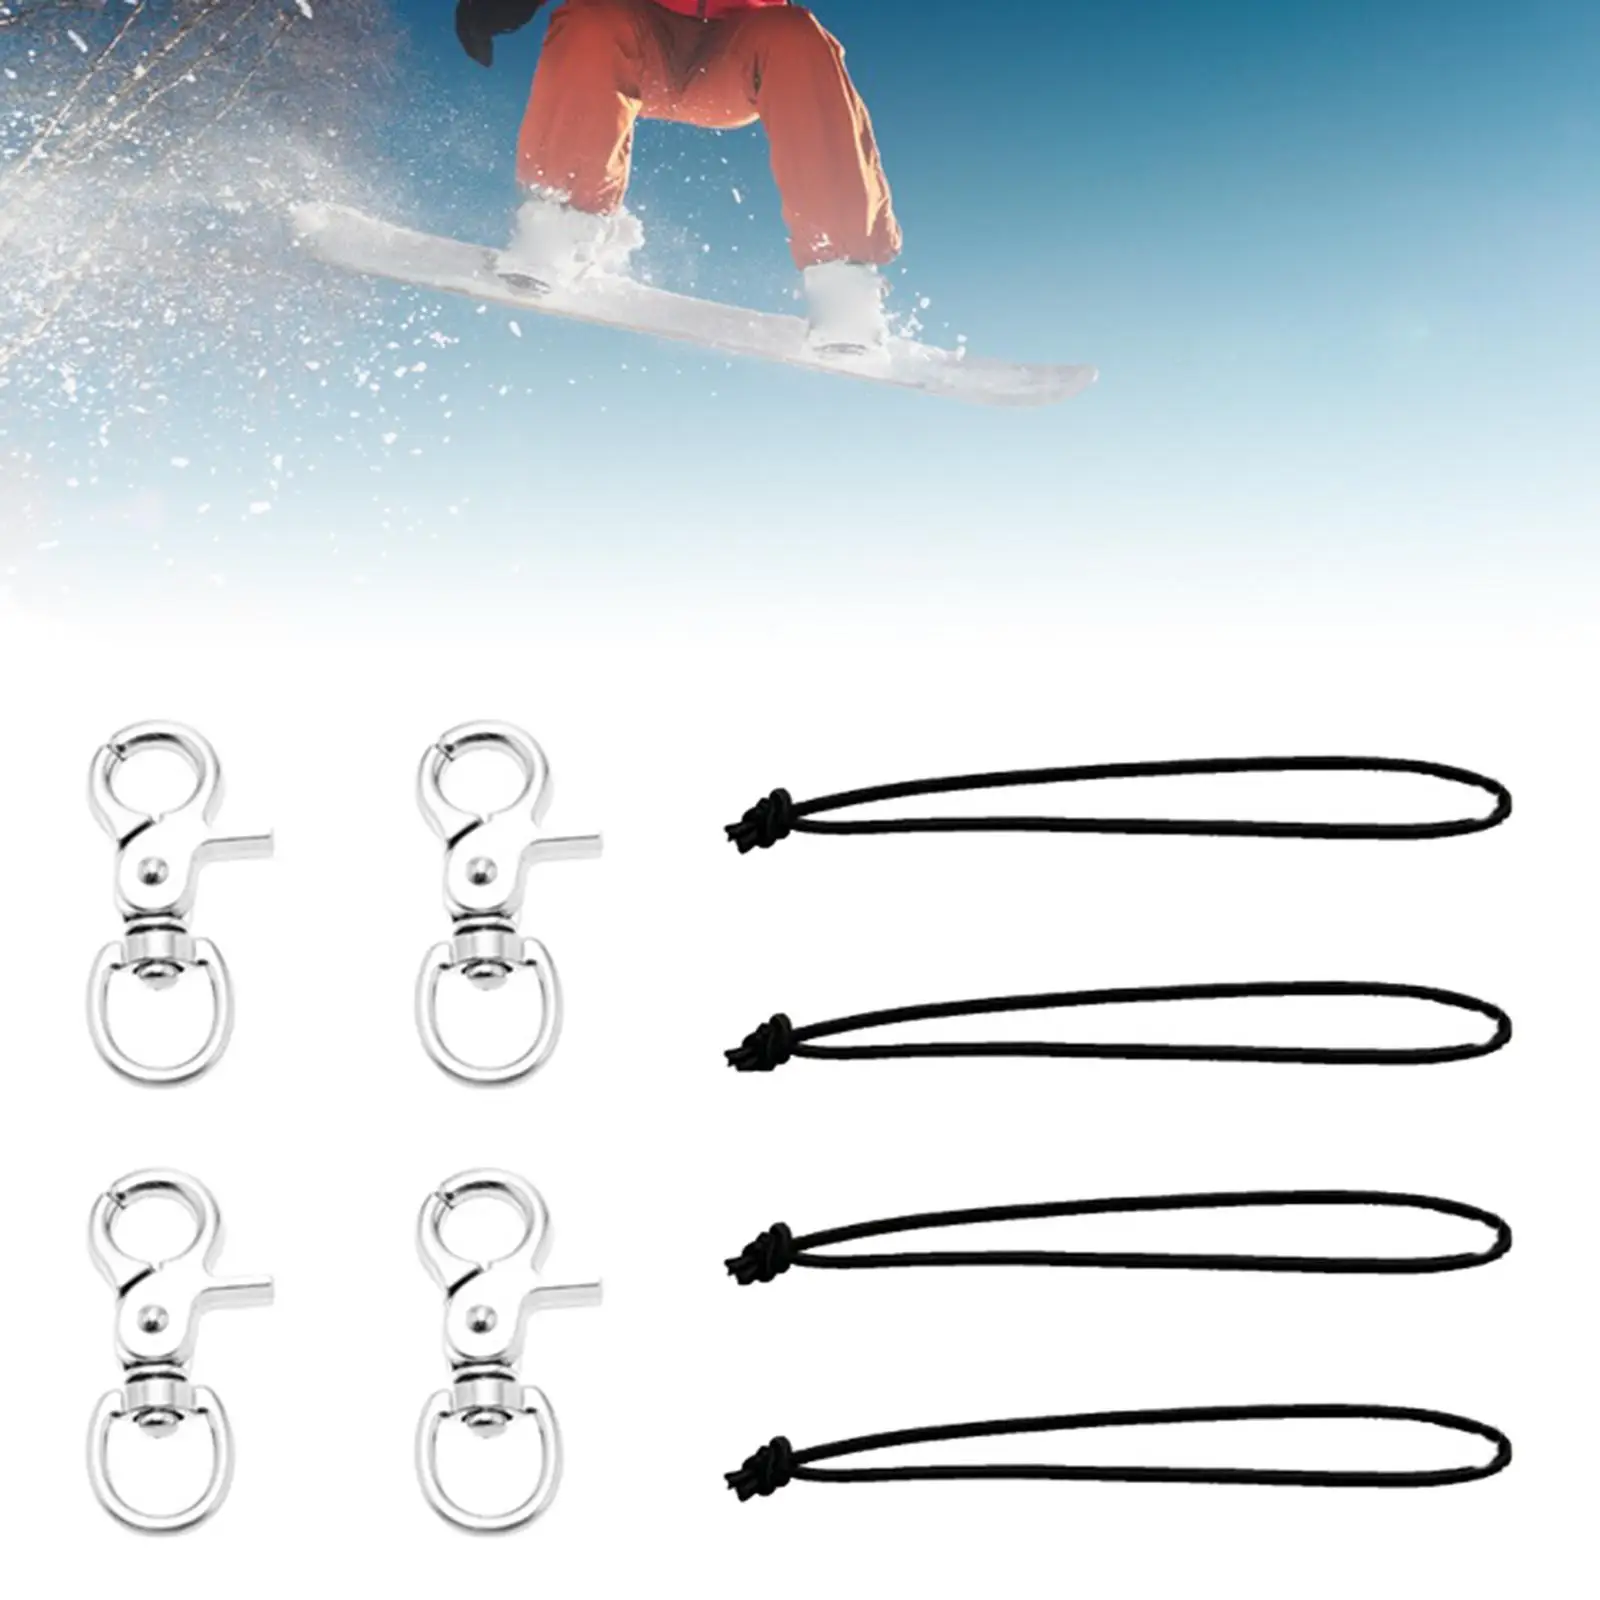 4x Practical Snowboard Leash Cord Snowboard Bindings Skiing Elastic Connecting